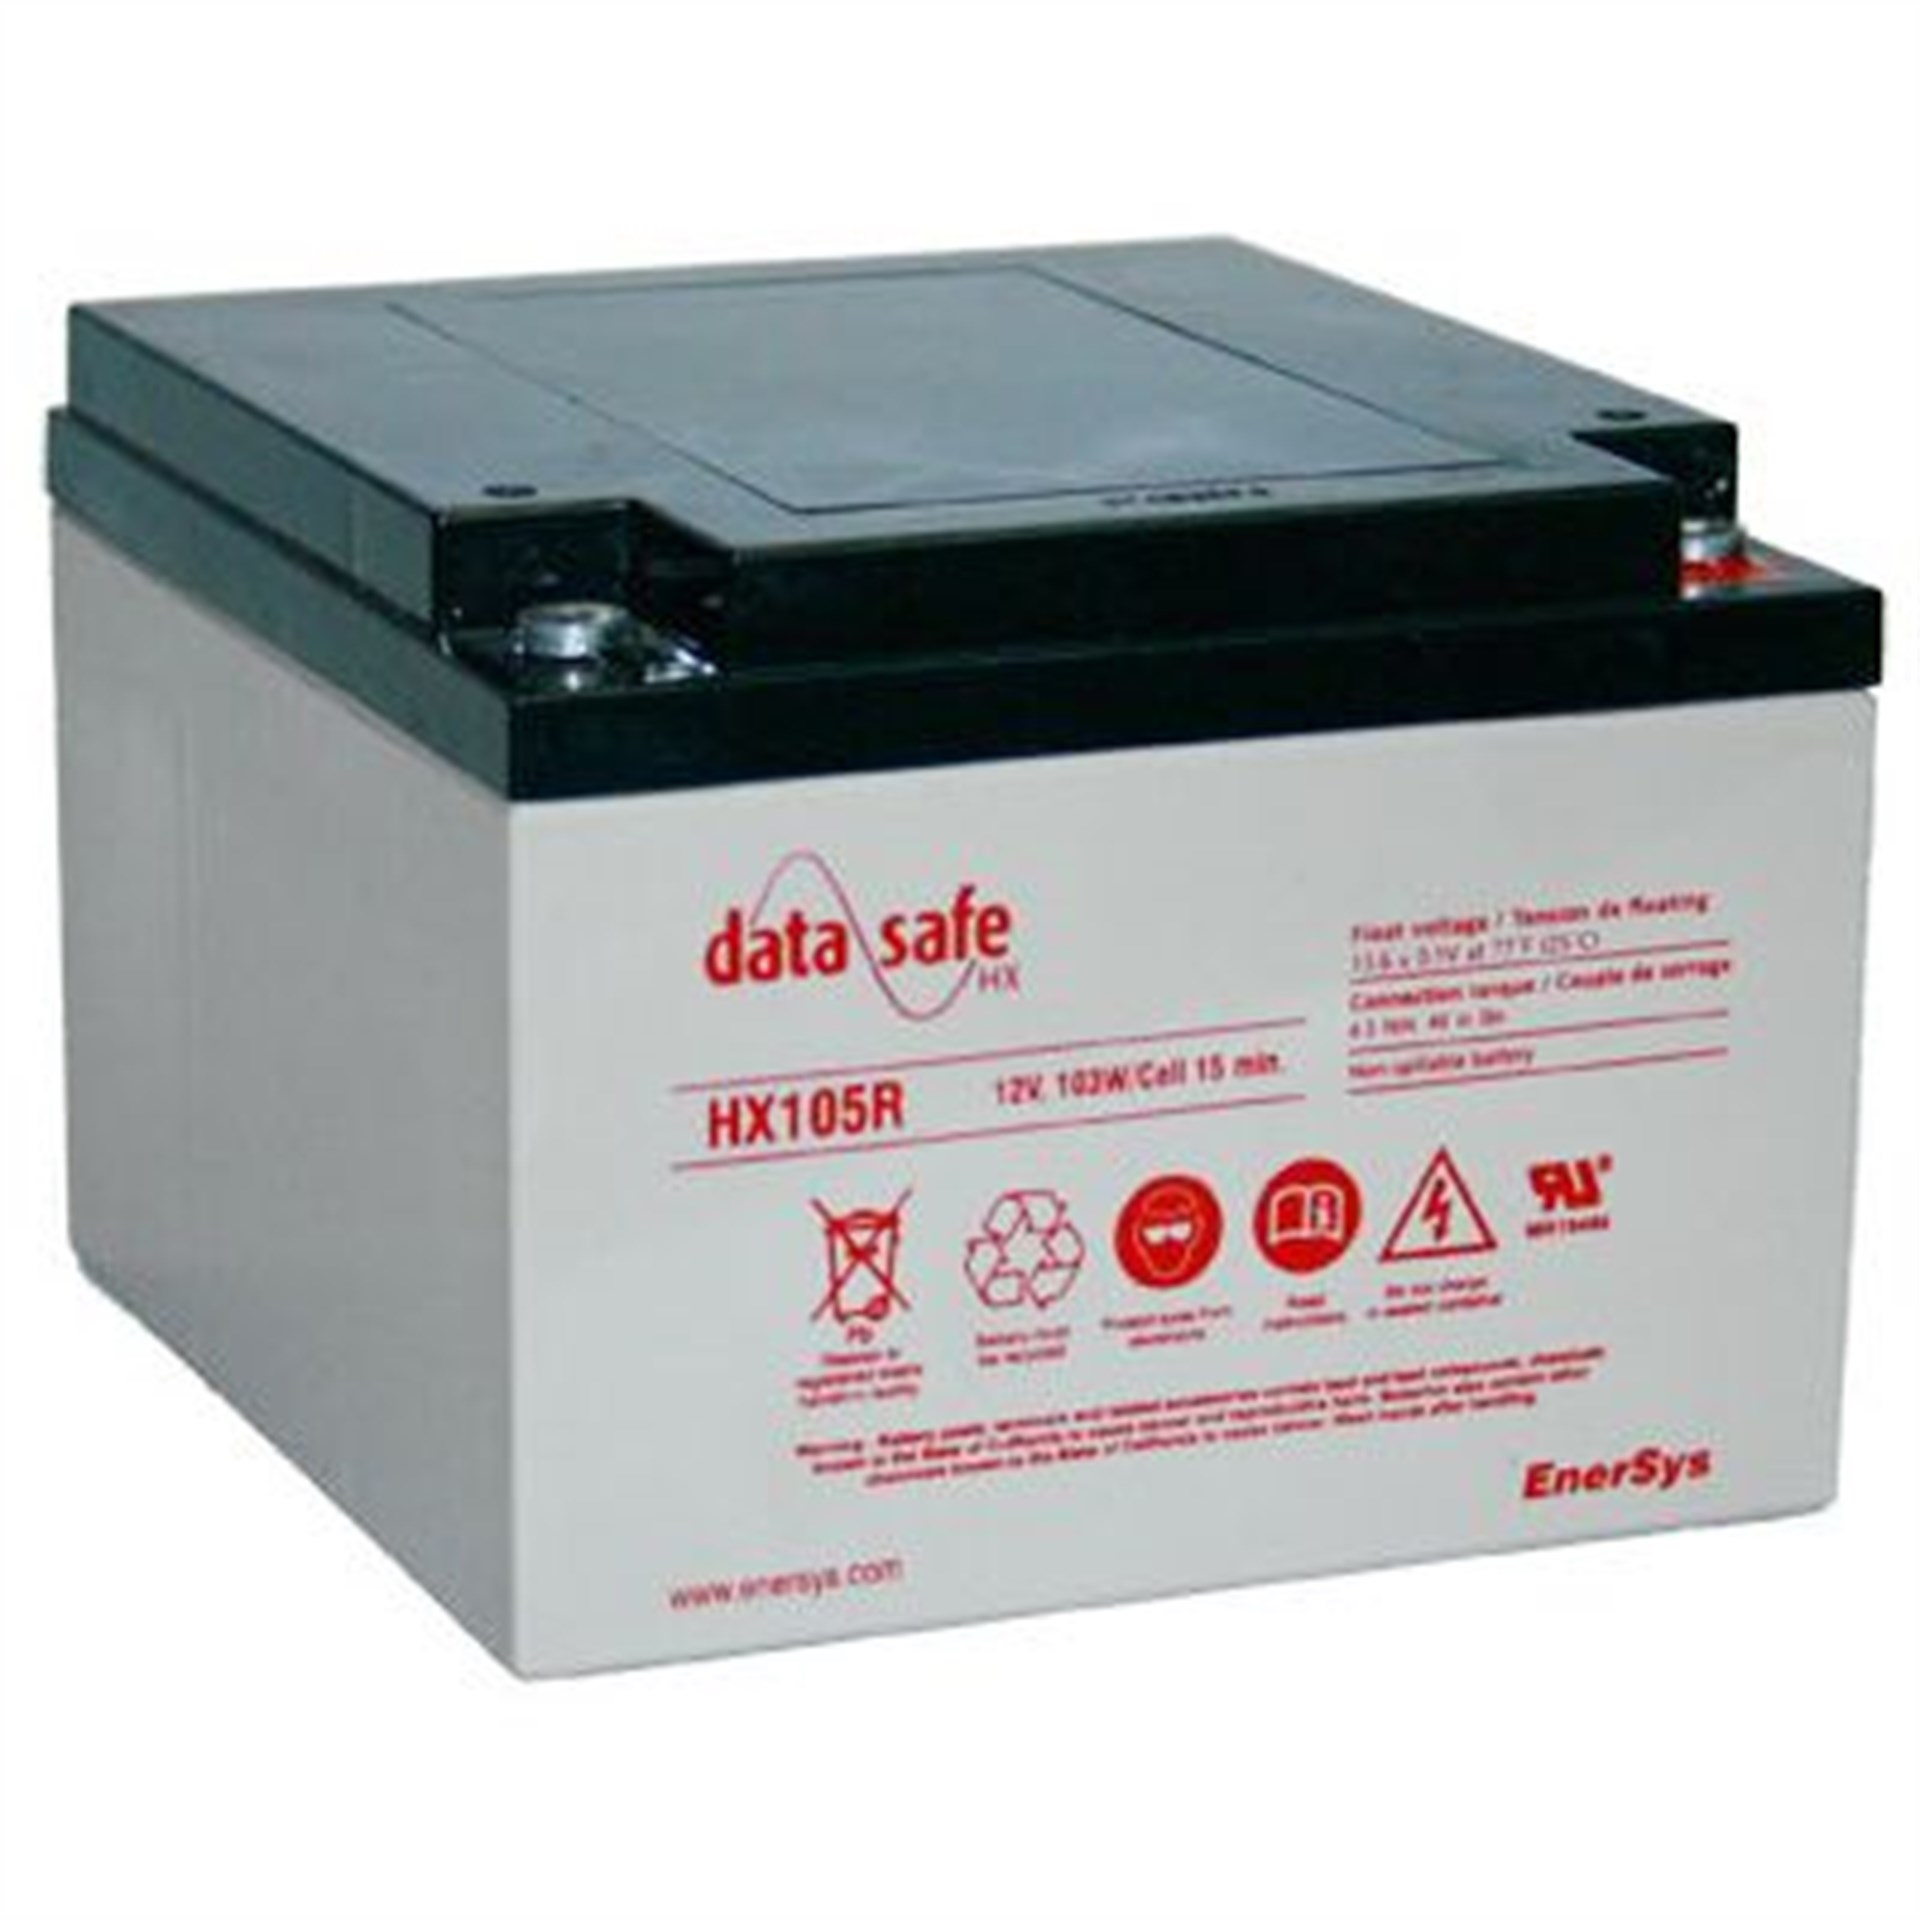 Акумулятор свинцево-кислотний Enersys DataSafe 12HX105